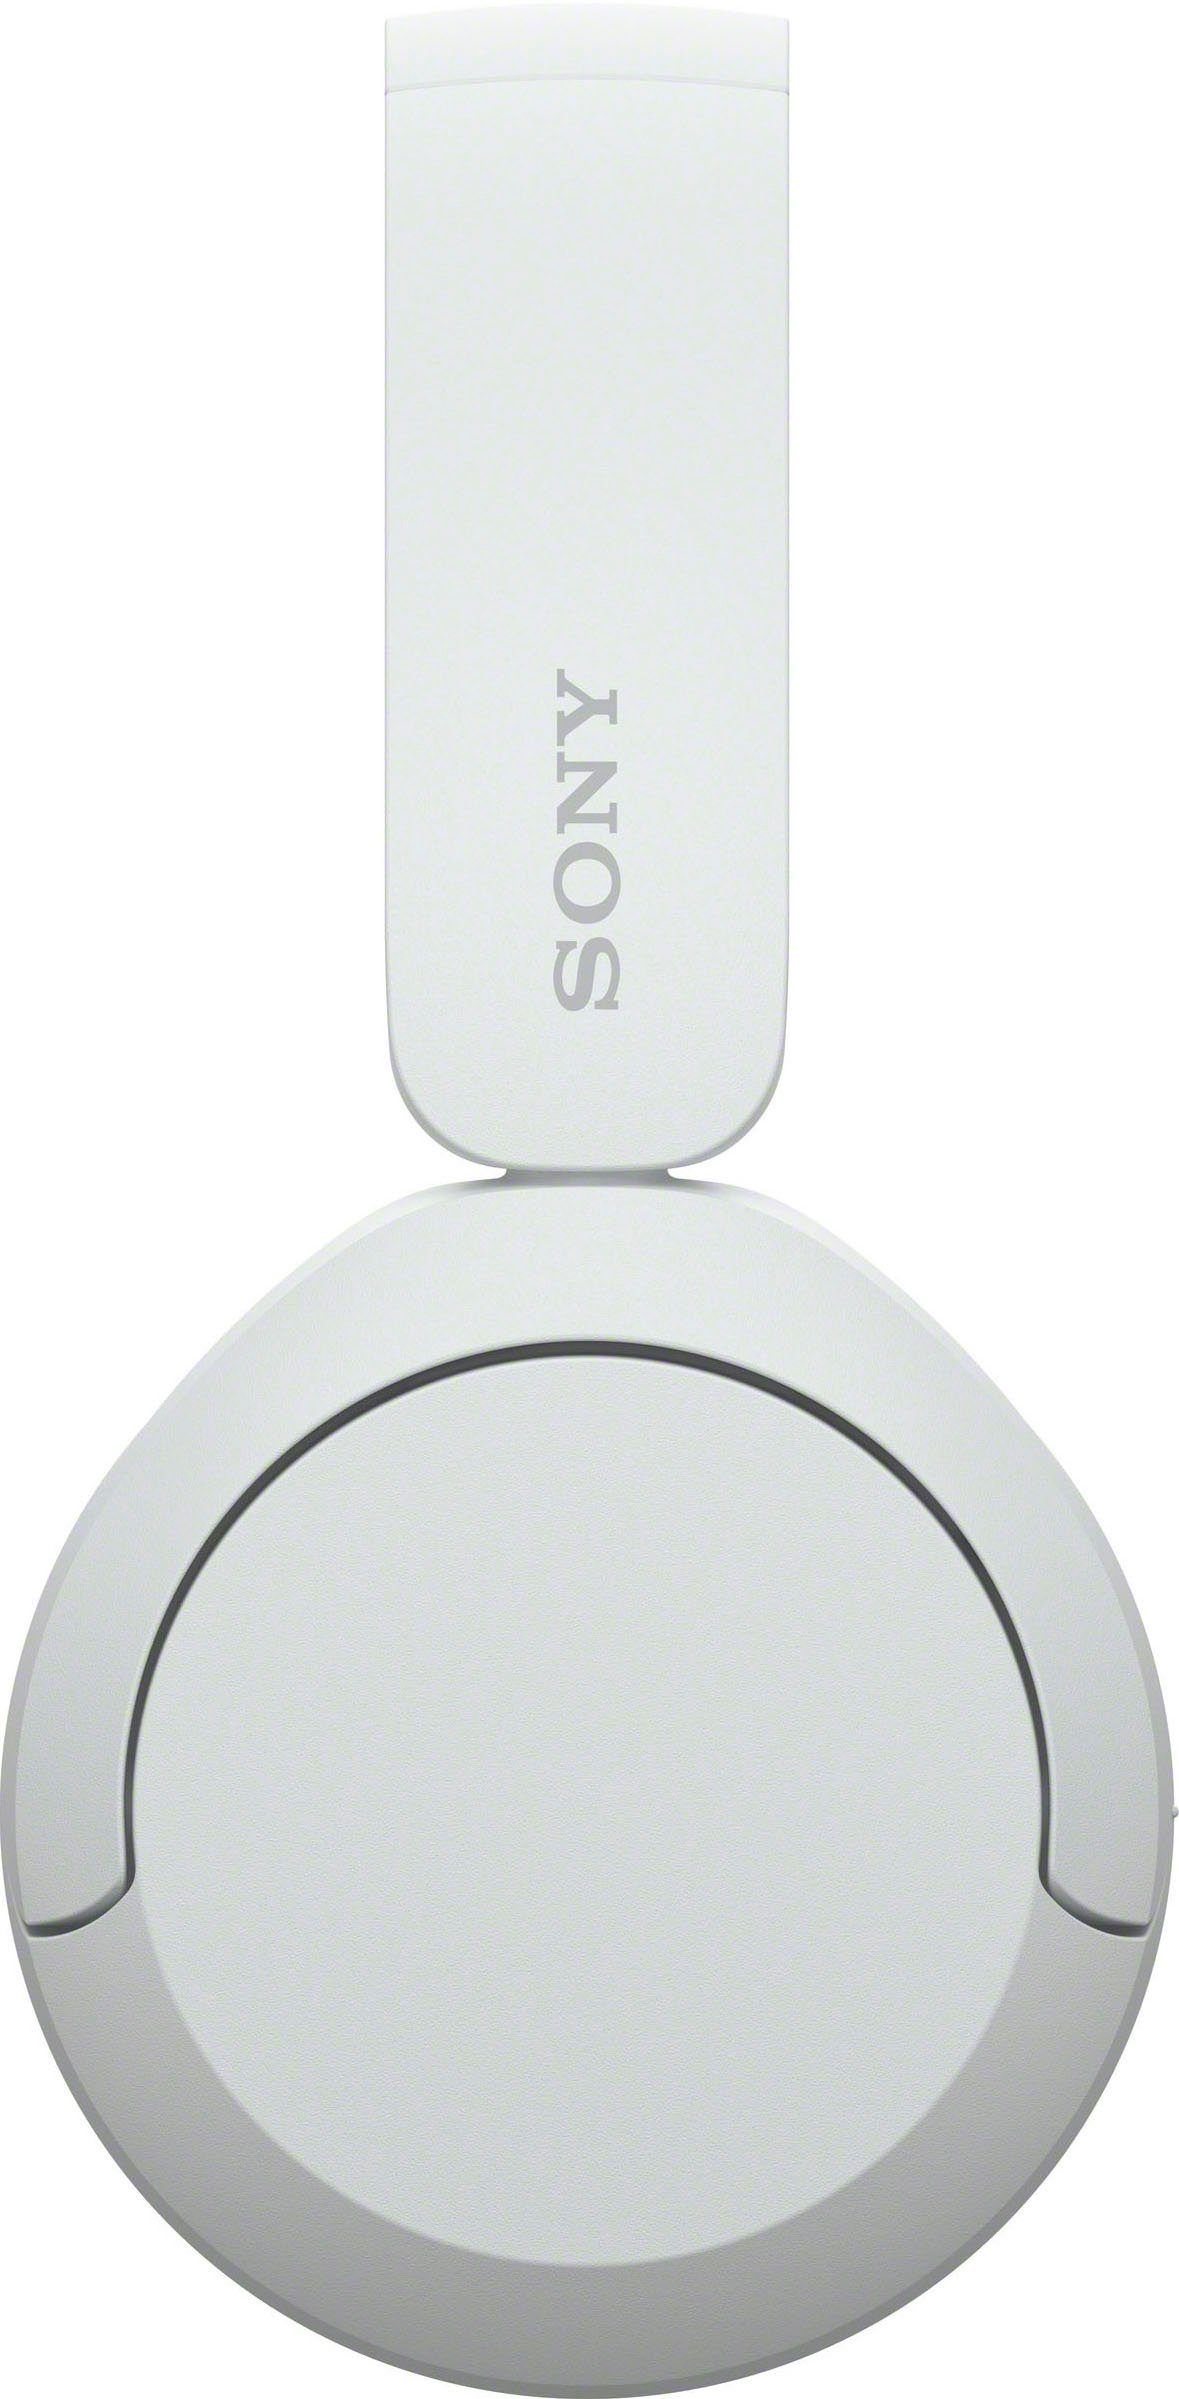 50 Google (Freisprechfunktion, Assistant, Sony Akkulaufzeit) WHCH520 Std. Weiß On-Ear-Kopfhörer Siri, Rauschunterdrückung, Bluetooth,